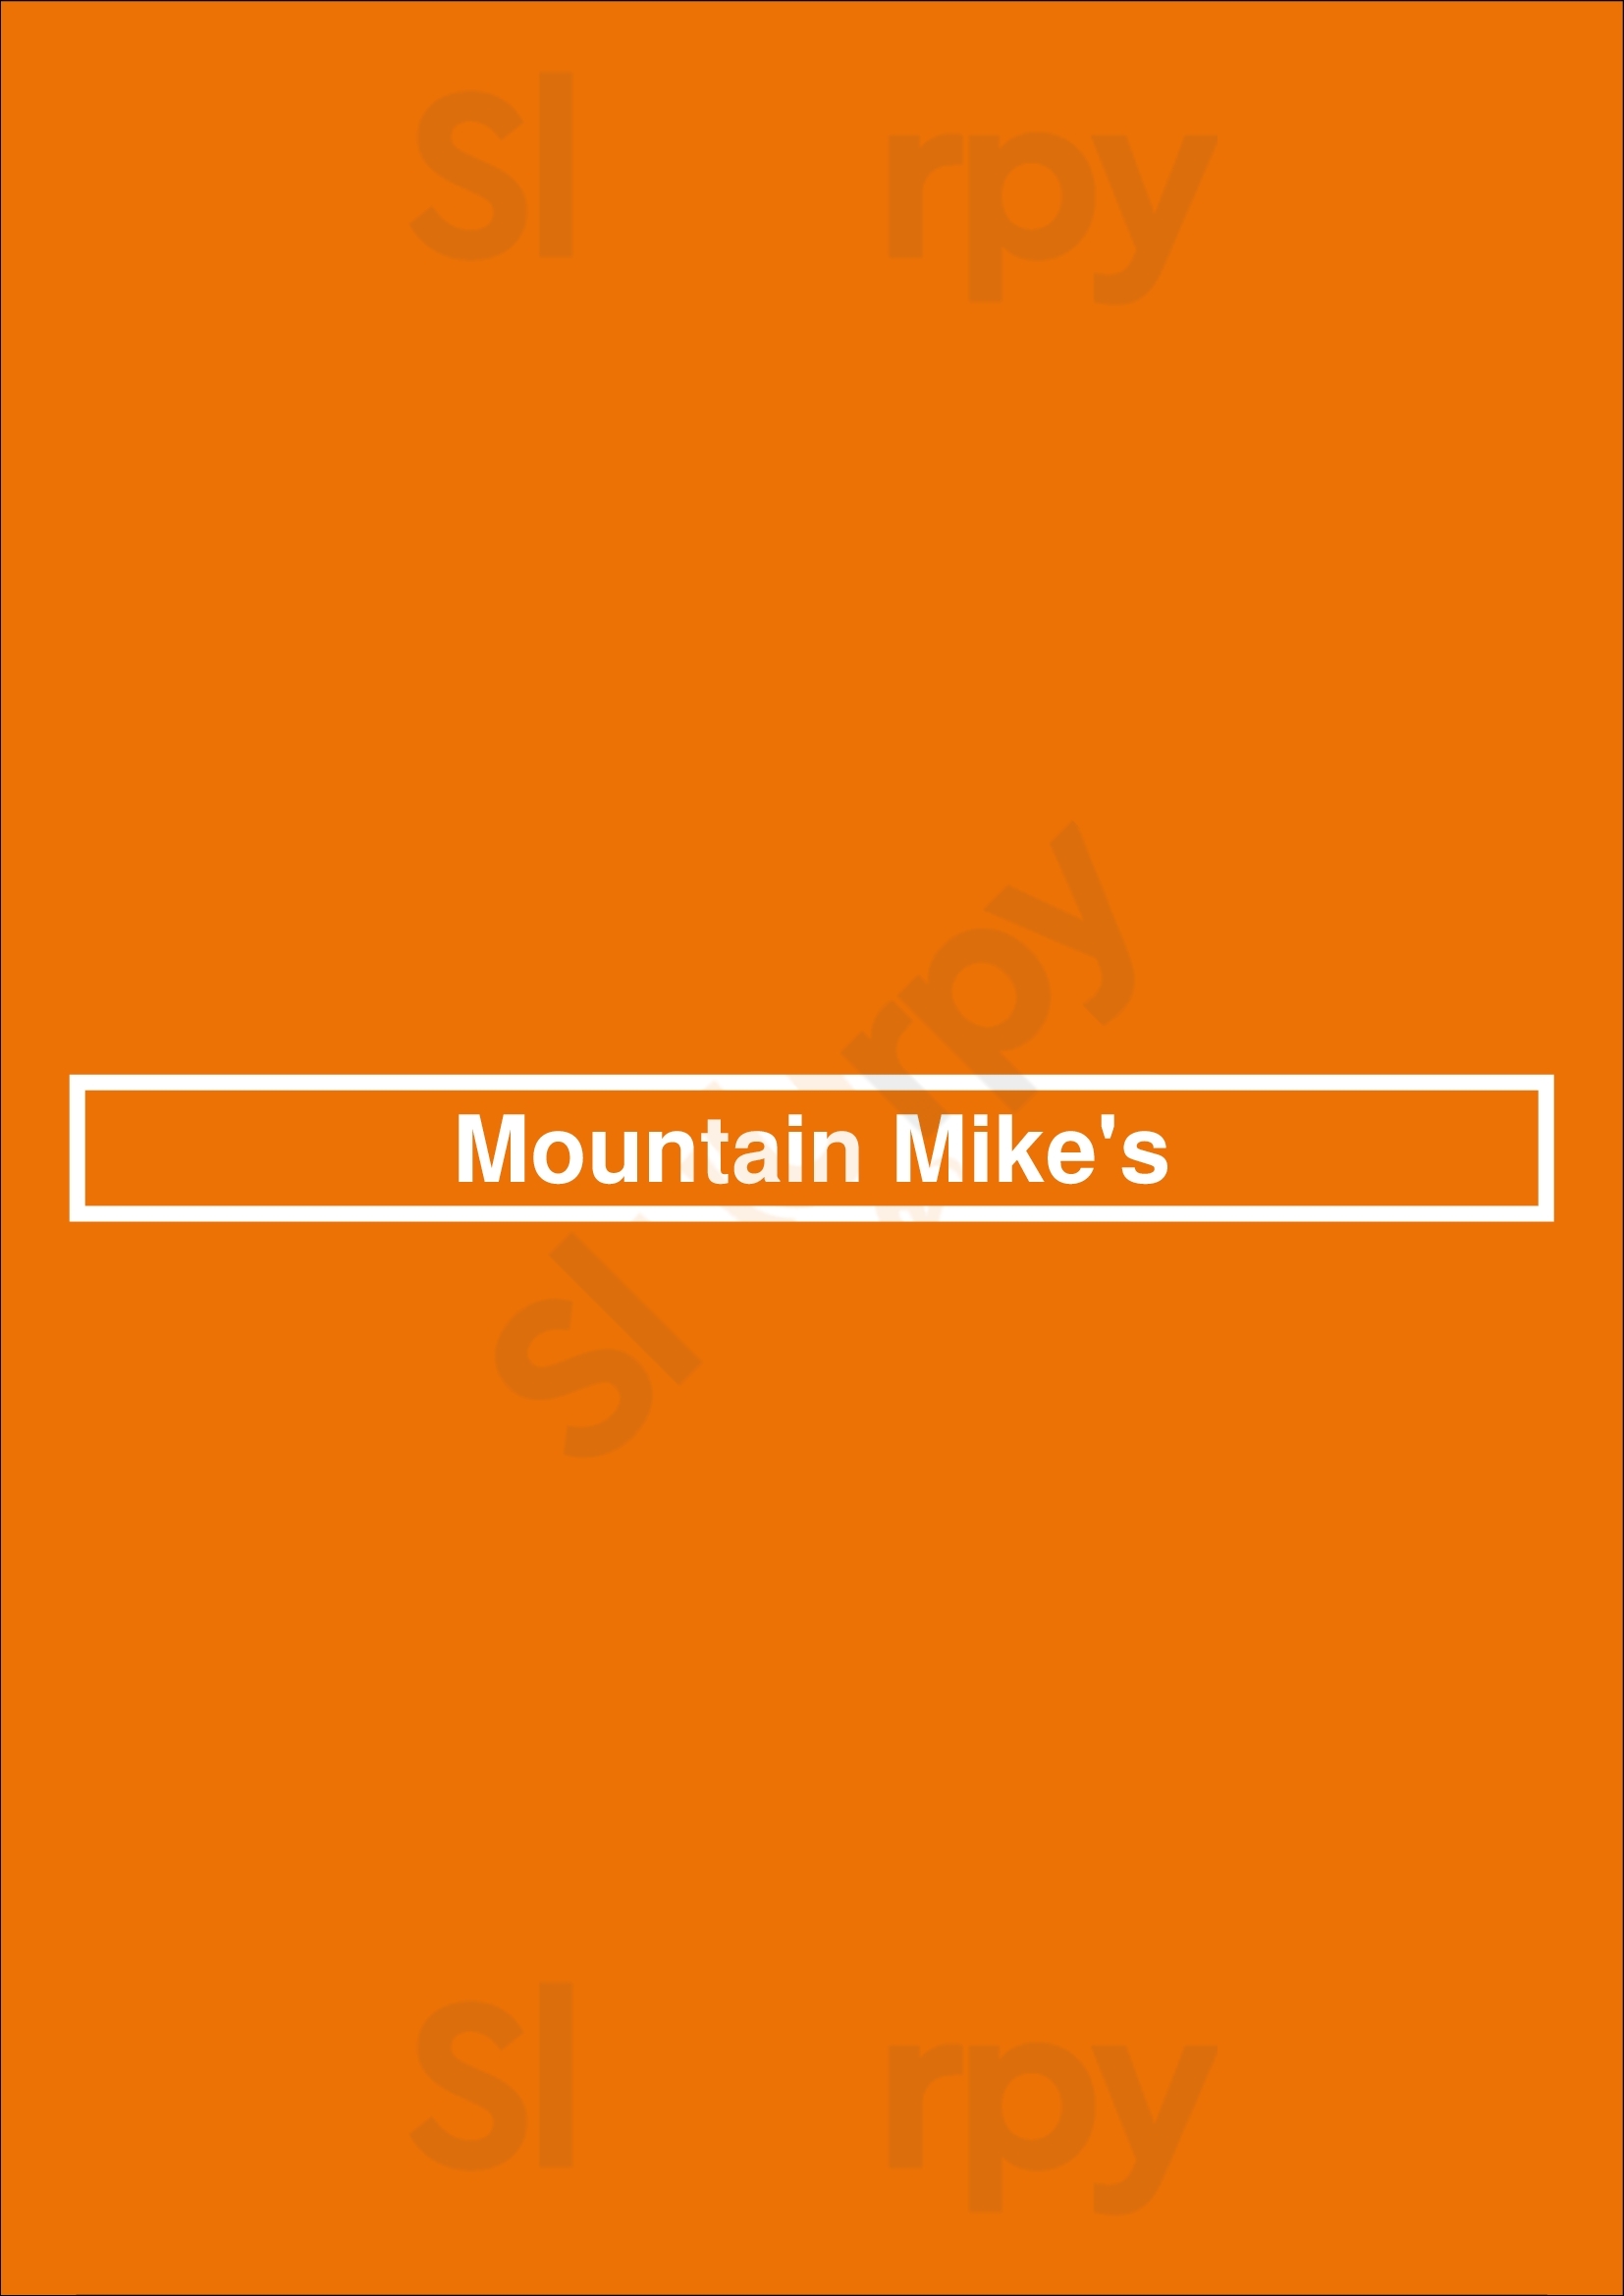 Mountain Mike's San Rafael Menu - 1